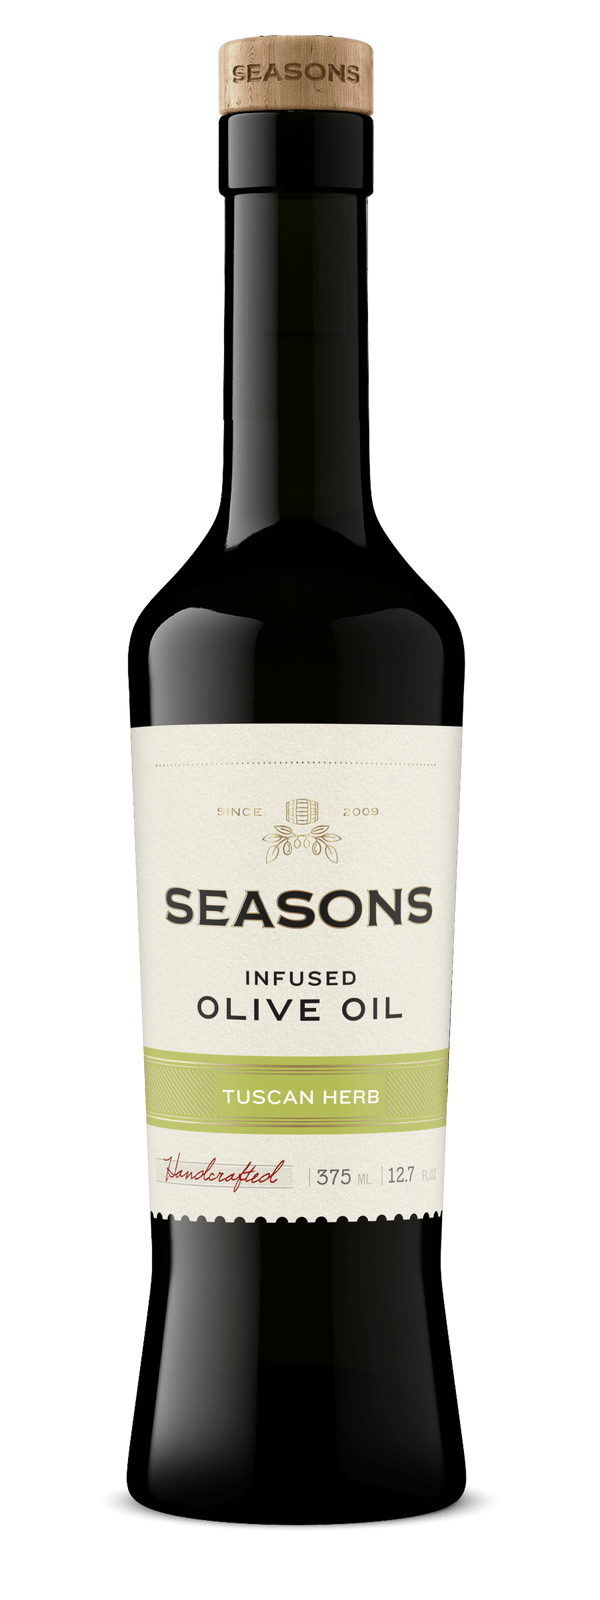 Seasons Infused Olive Oil 375mL Tuscan Herb